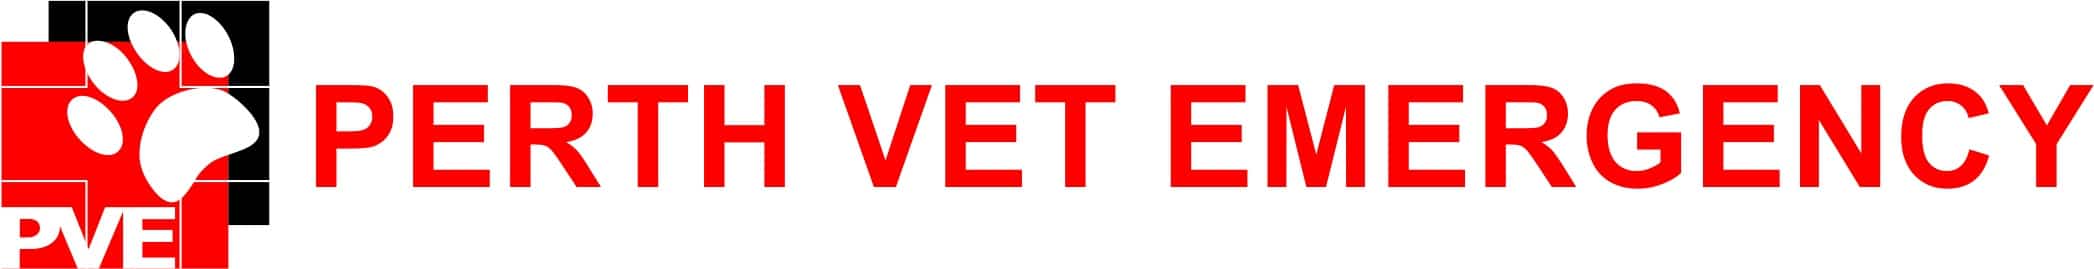 PVE logo